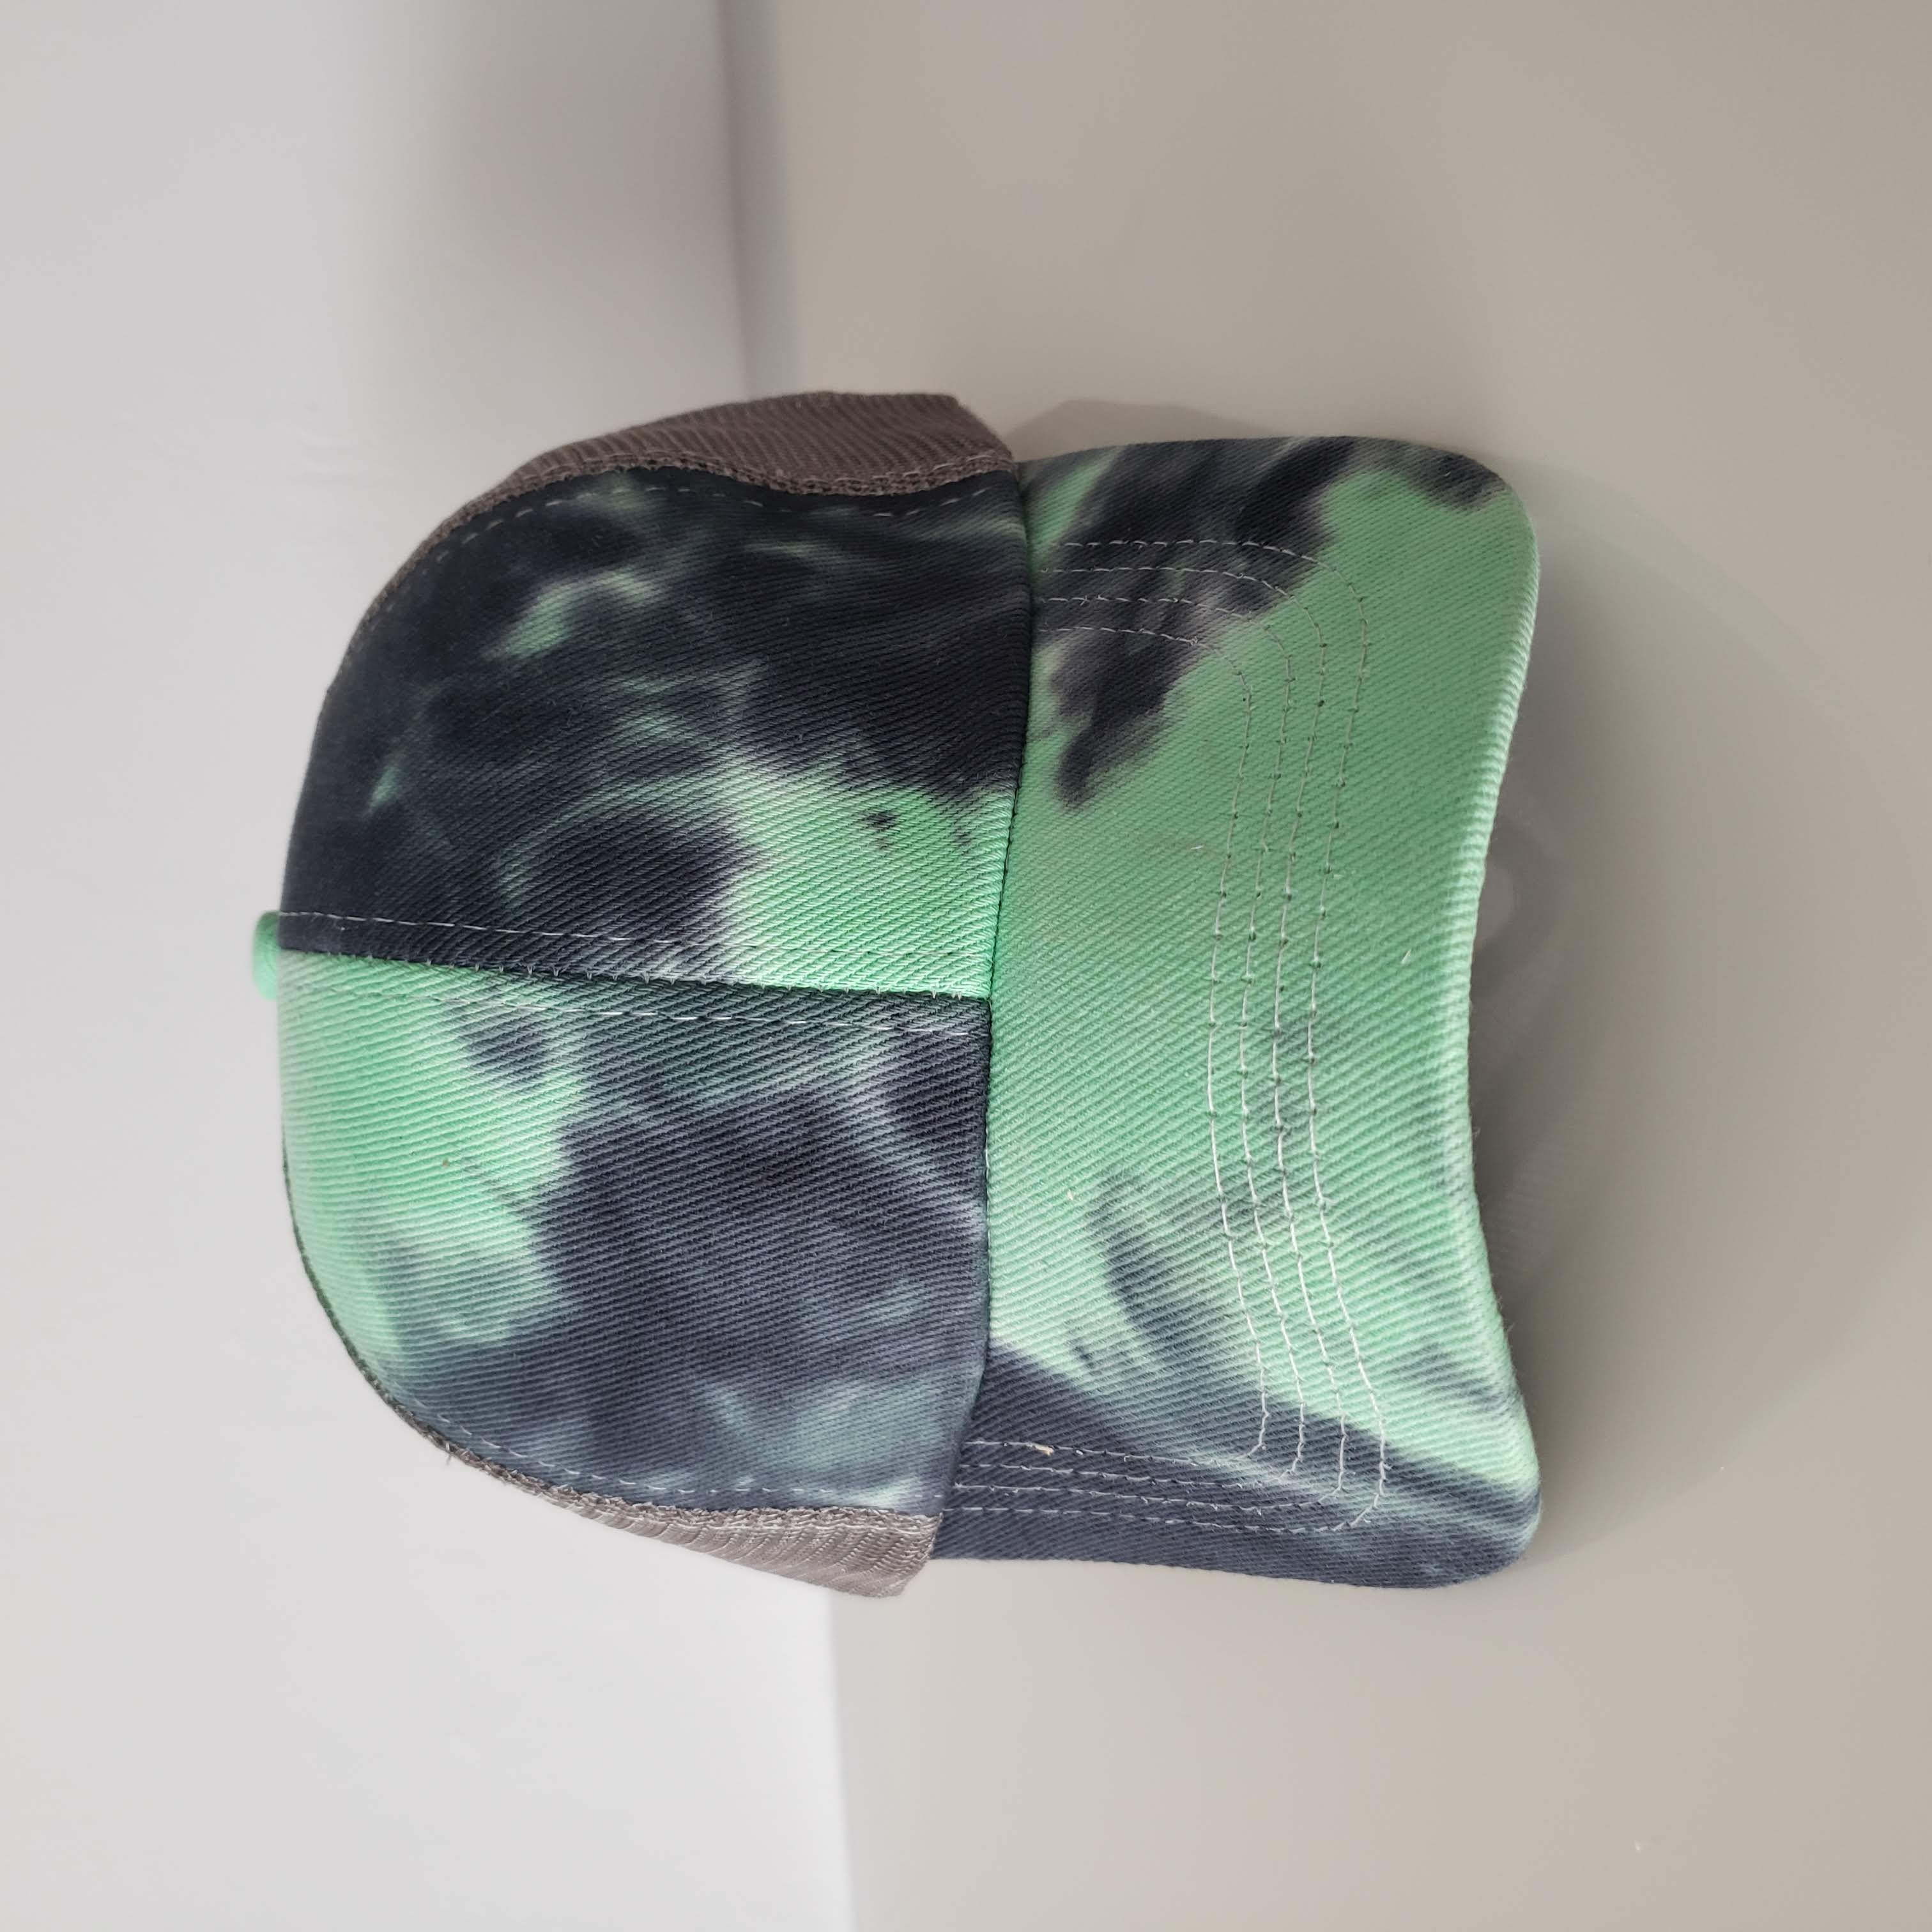 Ponytail Baseball Hat - Tie Dye Criss Cross MINT GREY BLACK-Design Blanks